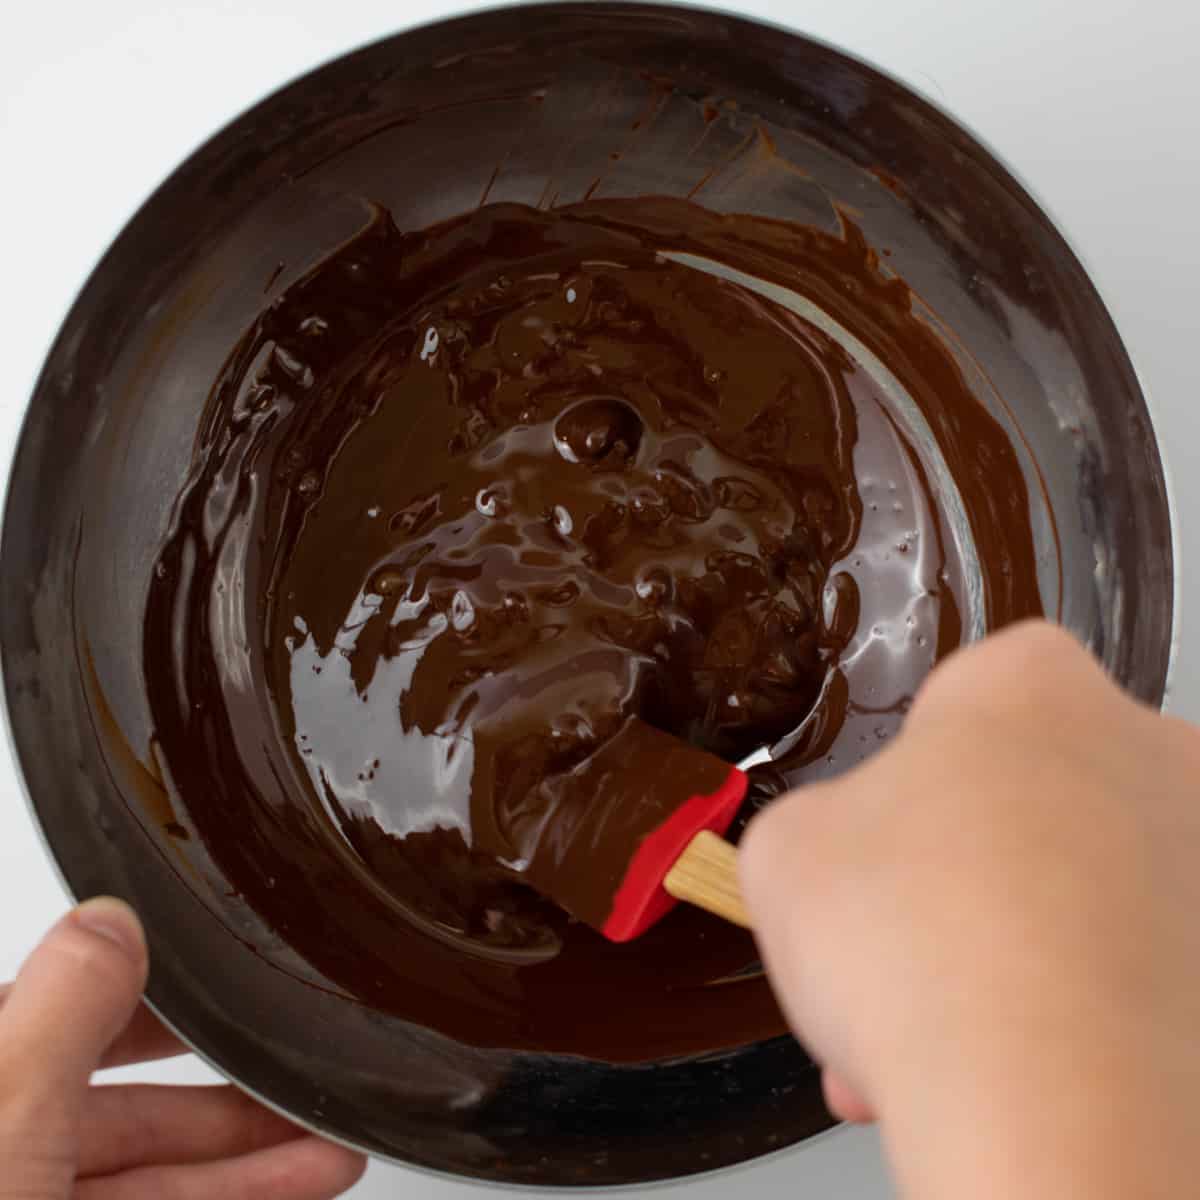 Stirring melting chocolate in a metal bowl.